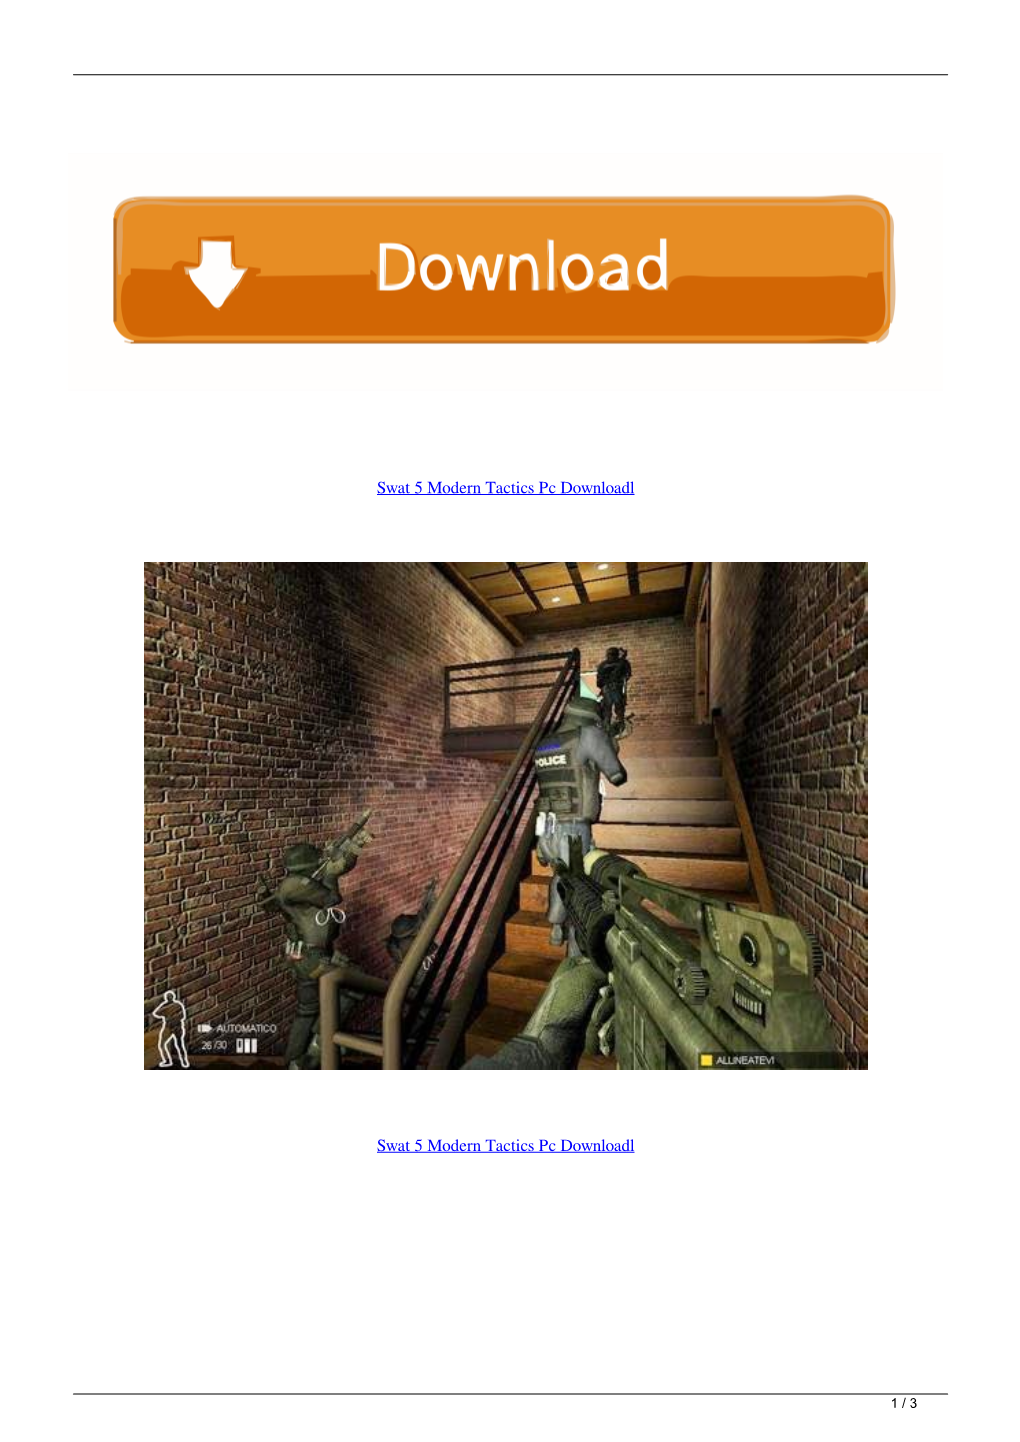 Swat 5 Modern Tactics Pc Downloadl